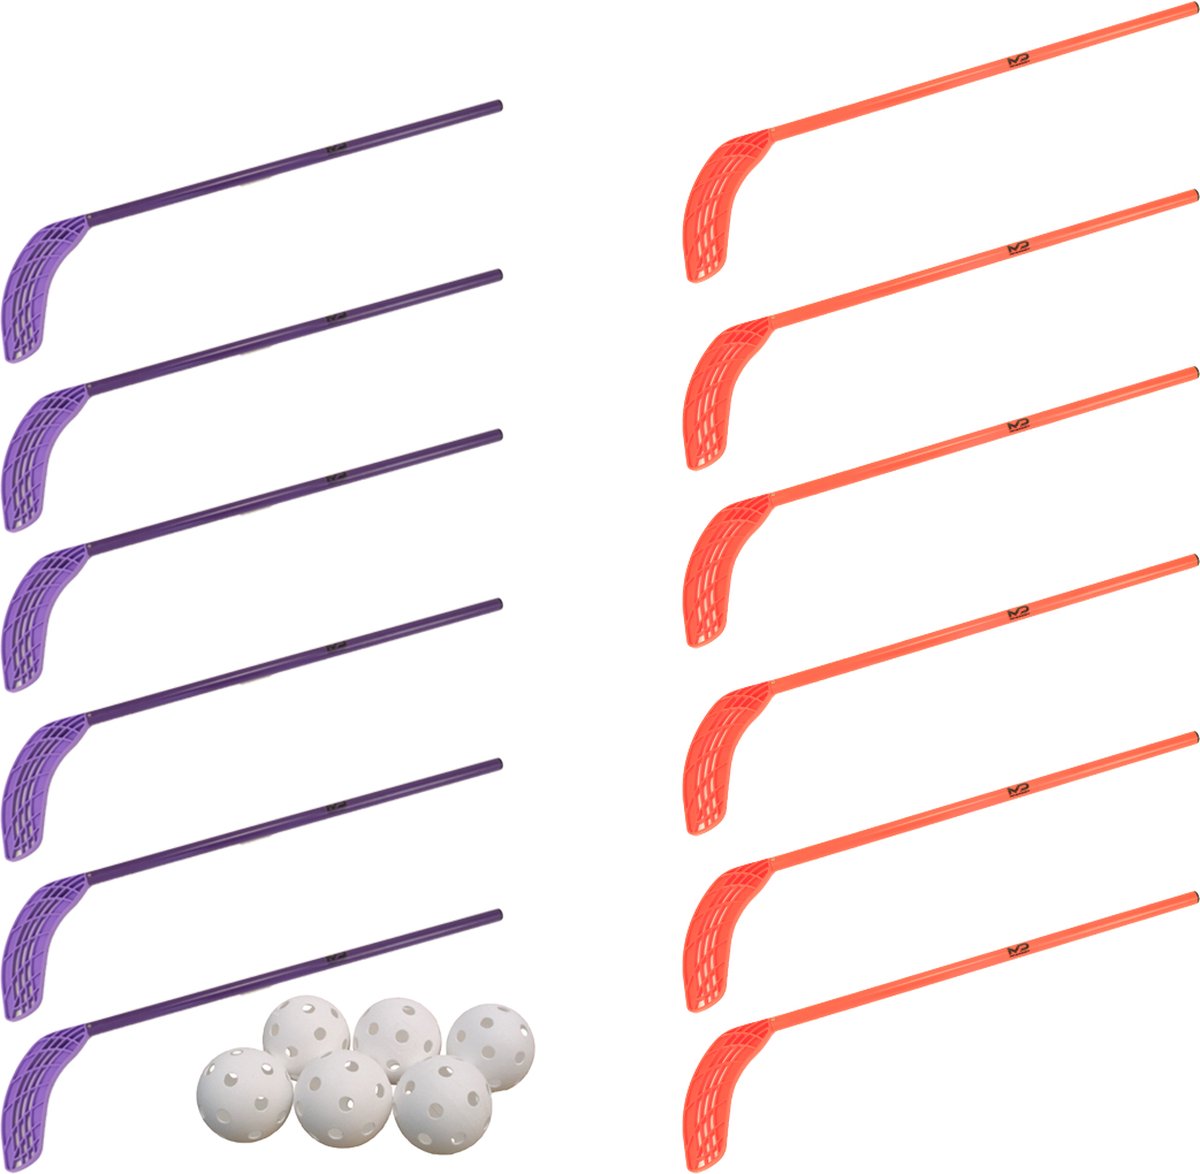 MDsport - Unihockey sticks - Kort - Floorball sticks - Kunststof hockeysticks - Set van 12 + 6 ballen - Basis onderwijs - Paars / Oranje